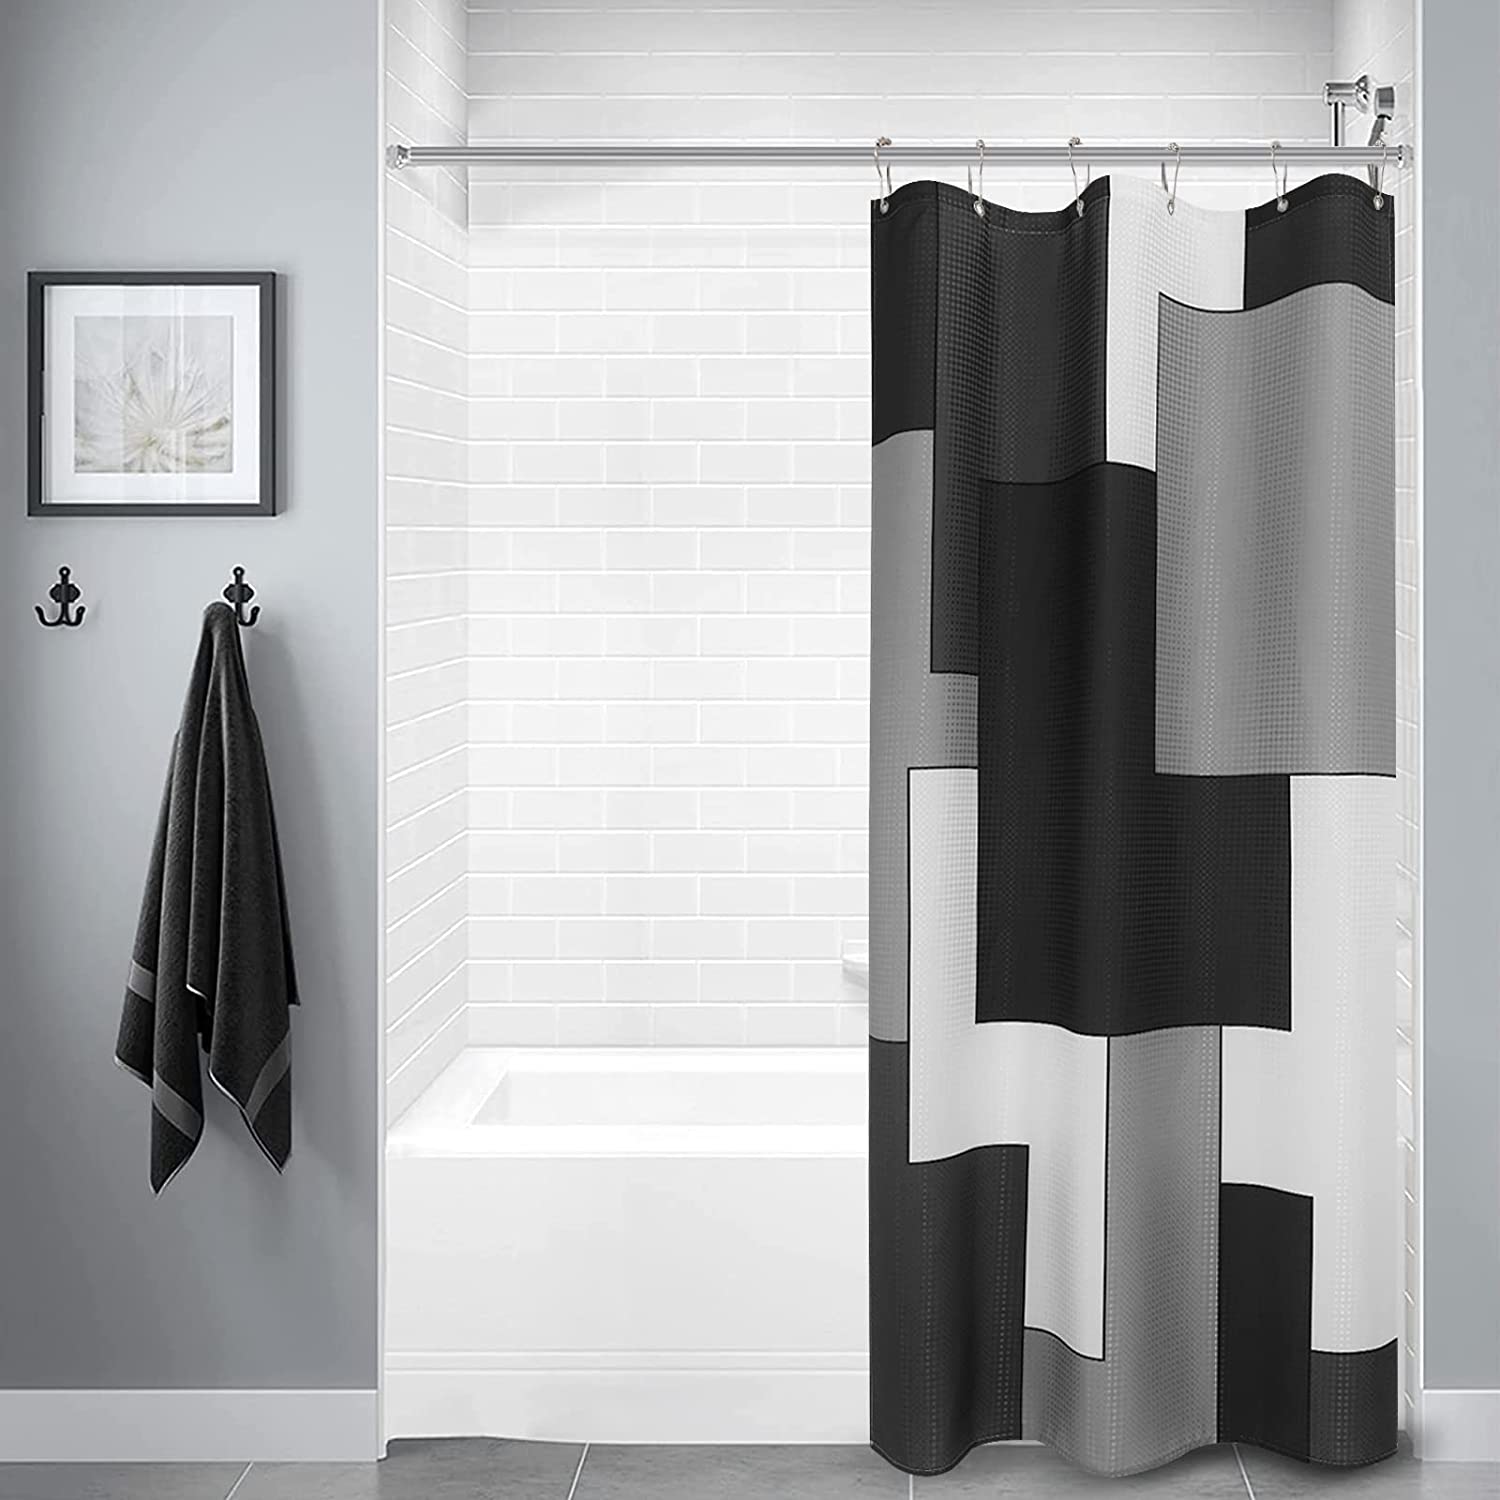 Louis vuitton bathroom set shower curtain style 61